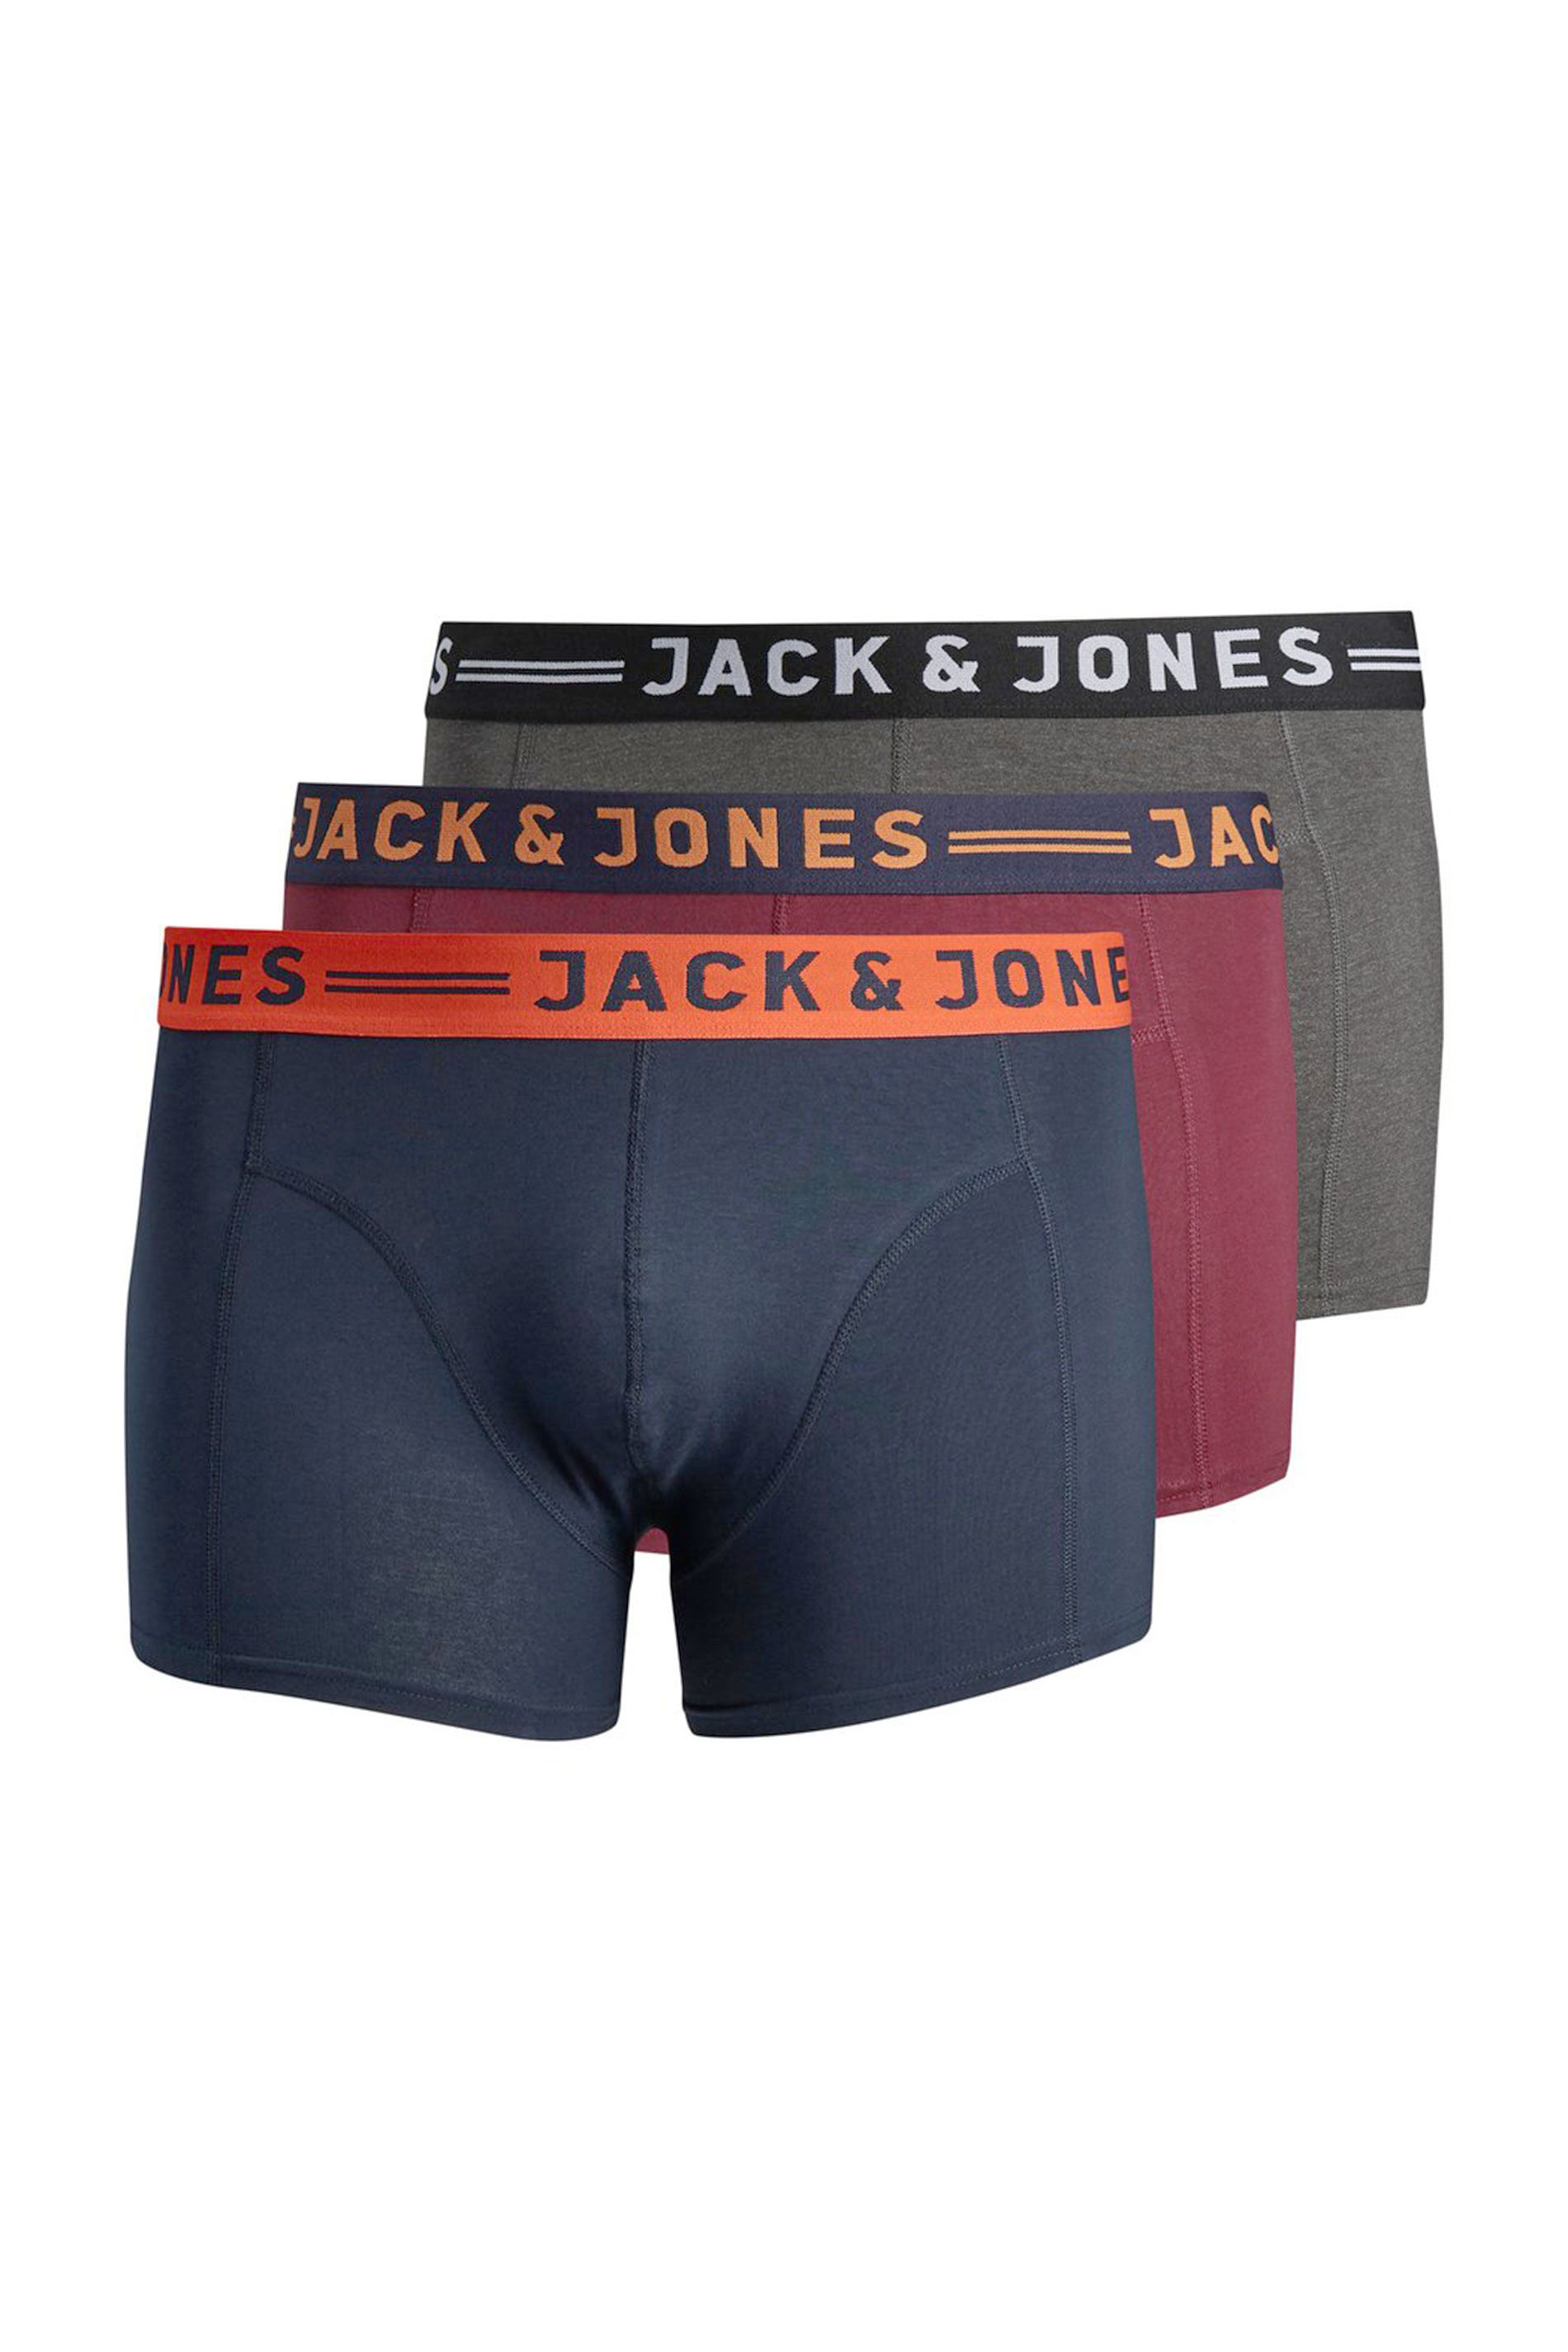 JACK & JONES 3 PACK Navy Blue Boxers | BadRhino 3